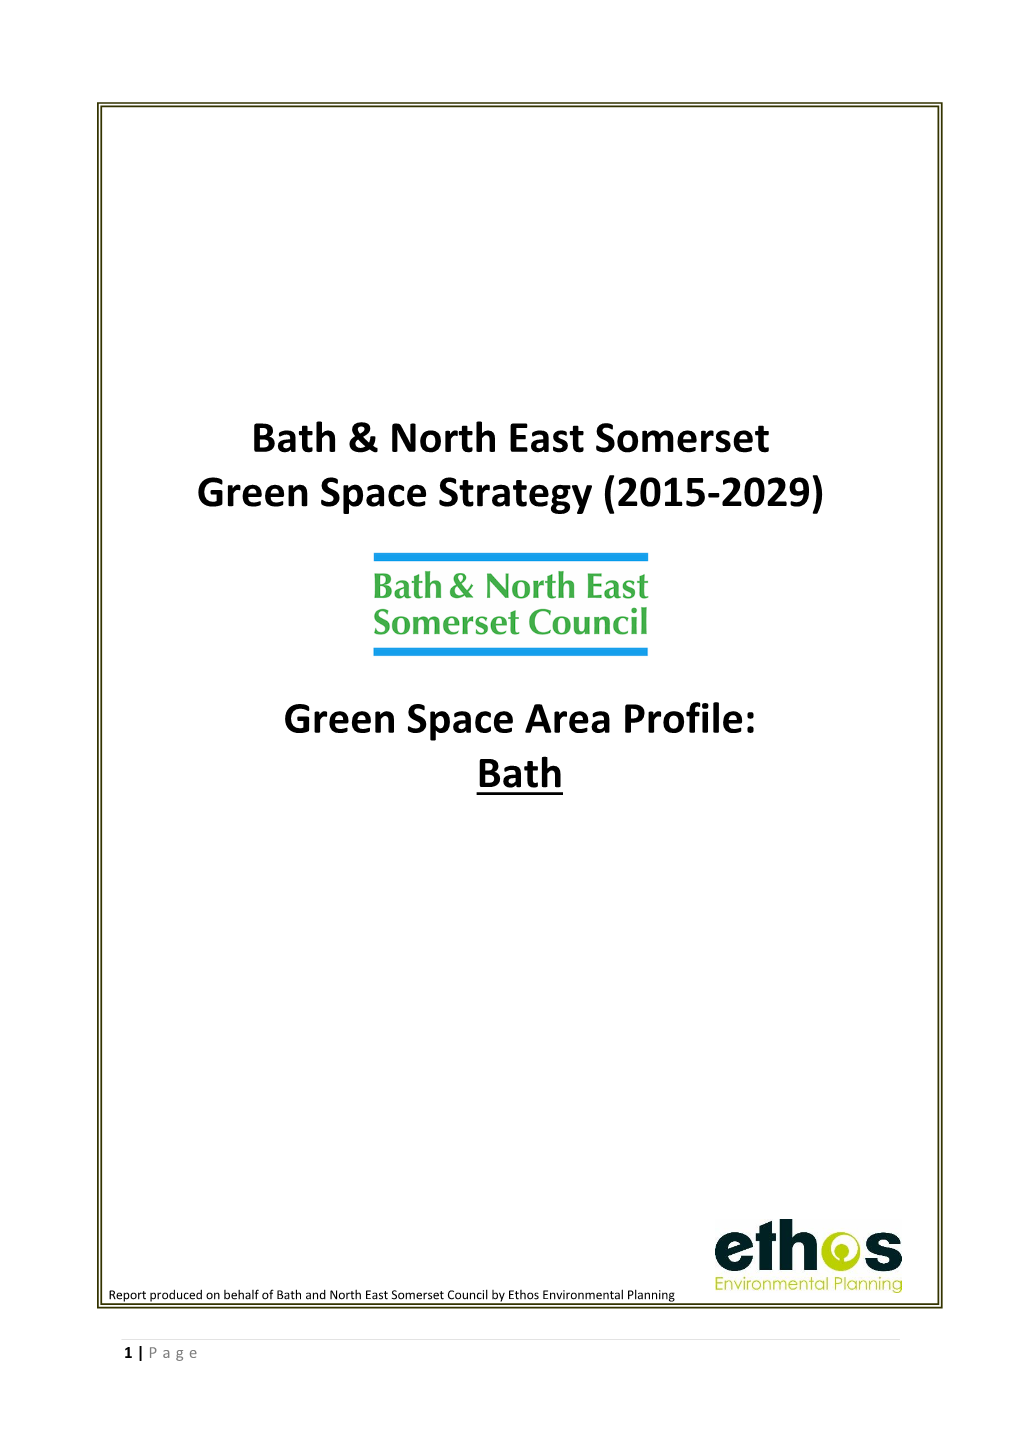 Green Space Area Profile: Bath